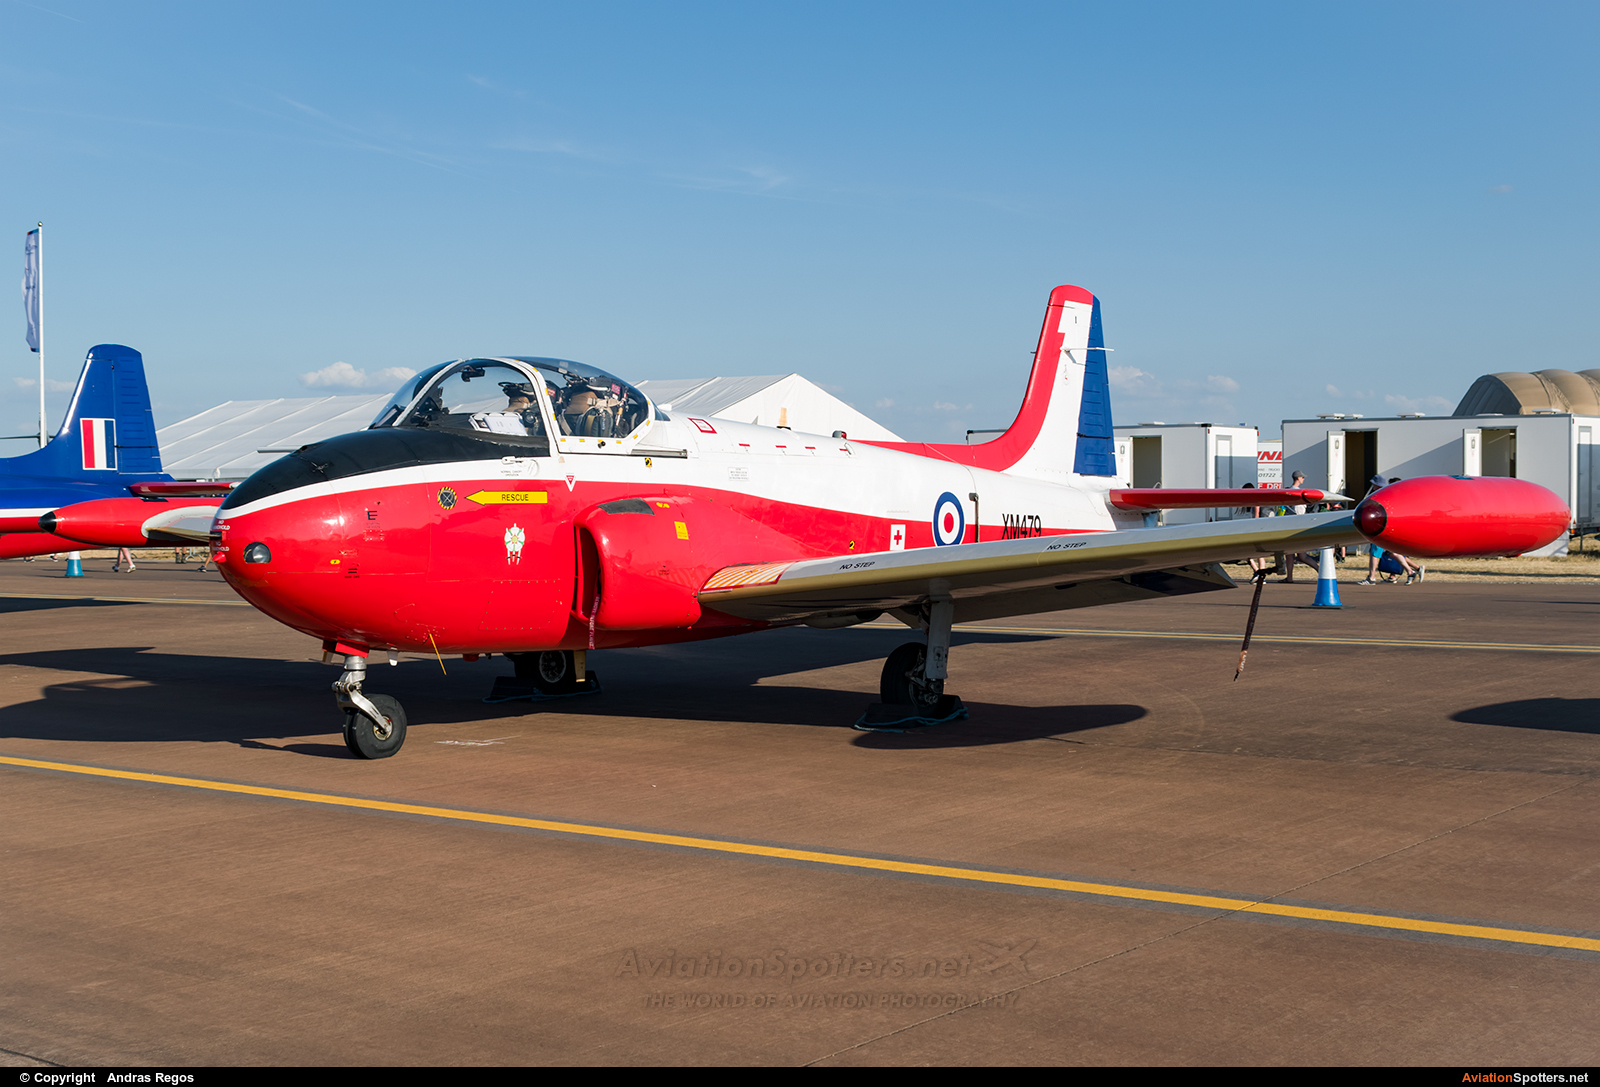 Newcastle Jet Provost Group  -  Jet Provost T.3 - 3A  (G-BVEZ) By Andras Regos (regos)